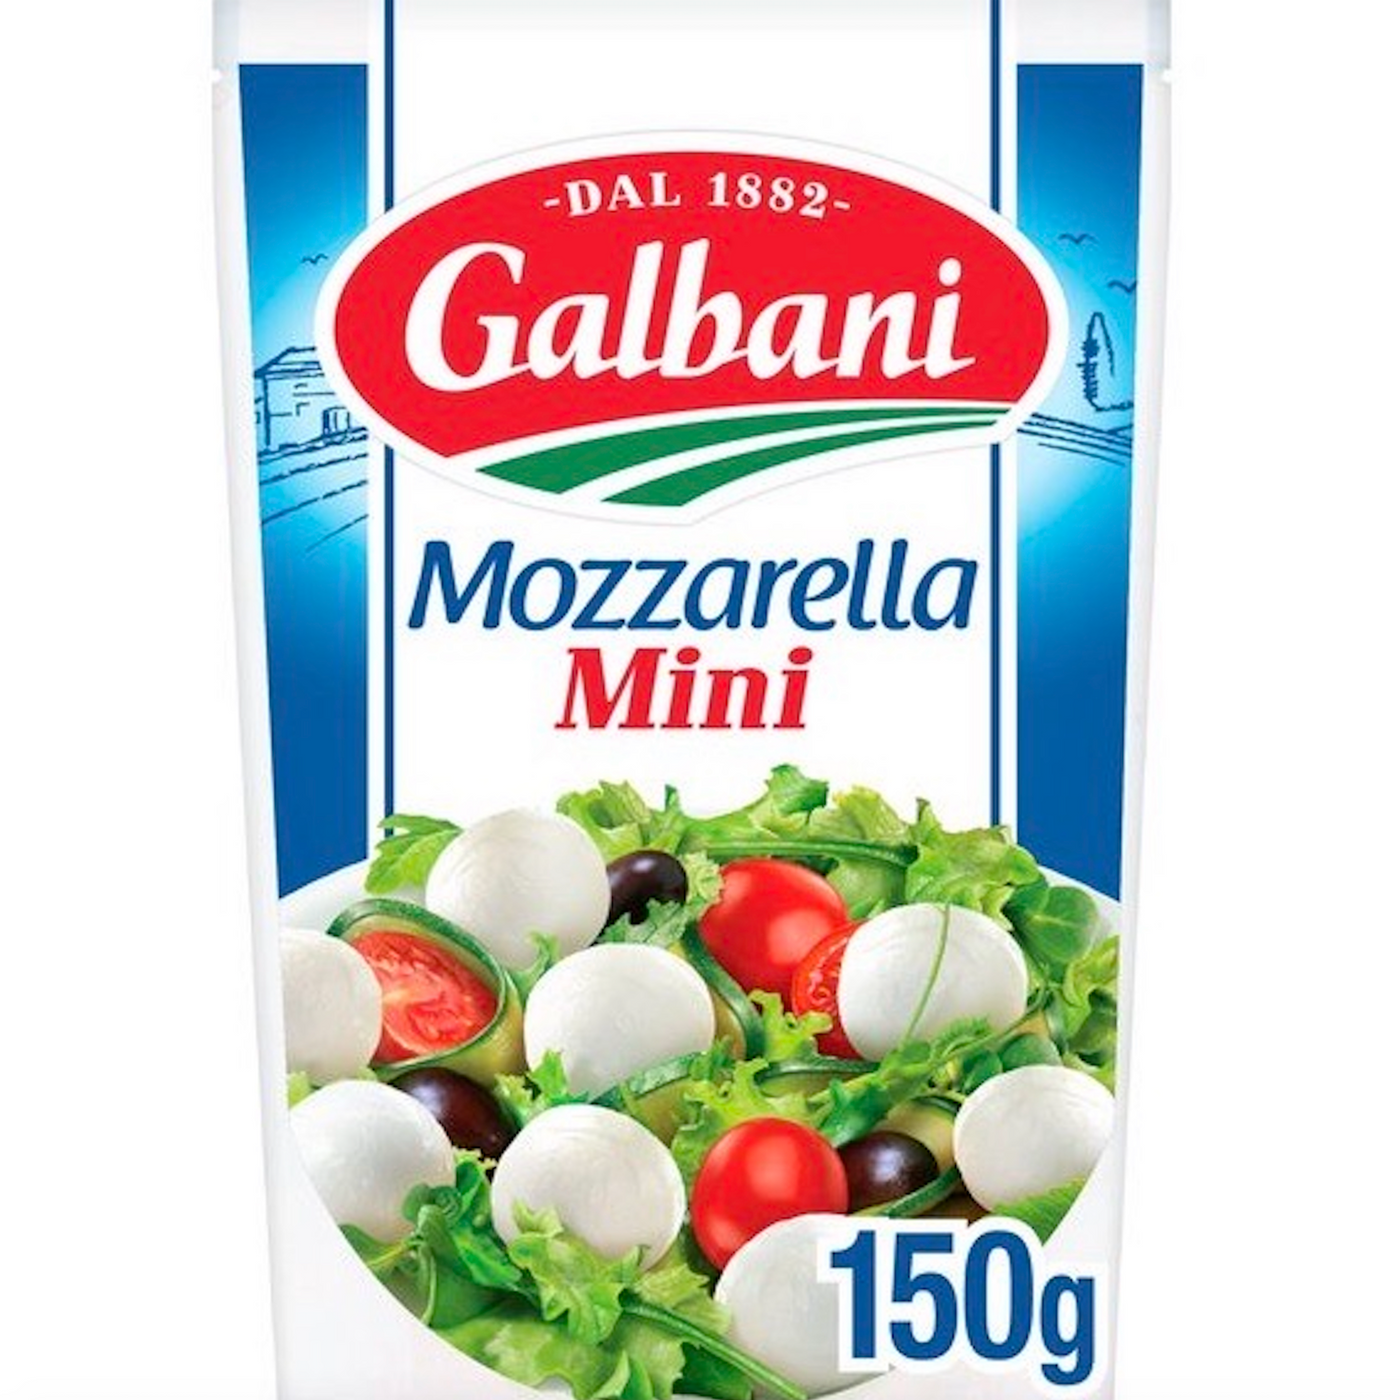 mozzarella-balls-galbani-online-grocery-supermarket-delivery-singapore-thenewgrocer